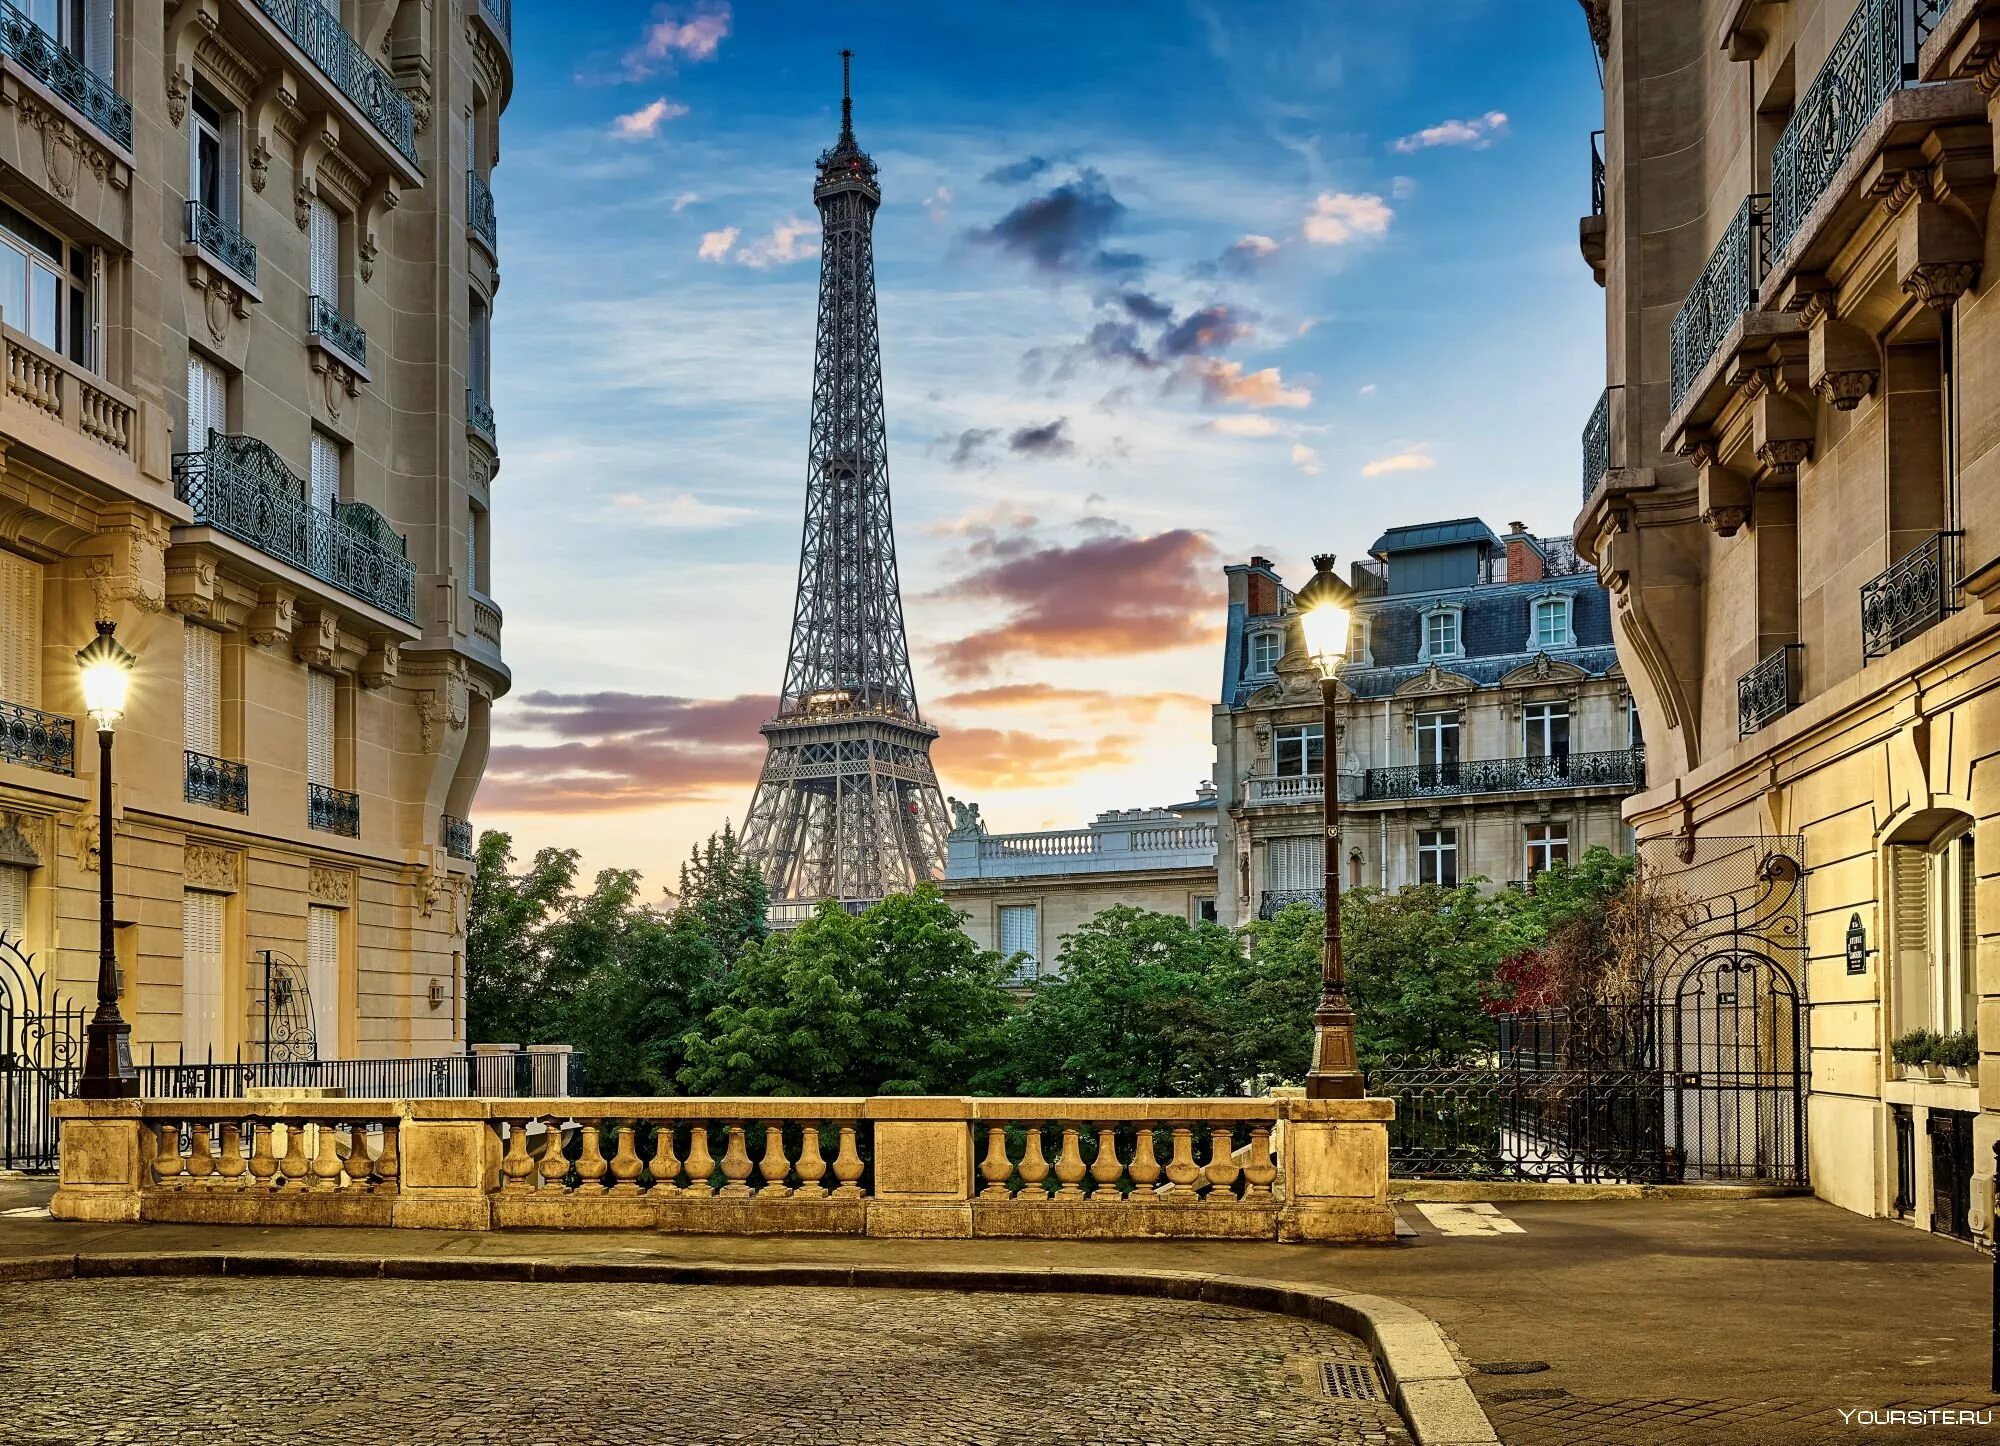 Француз улица. Эйфелева башня в Париже. Париж улица Верди. Улица в Париже с эльфивой башней. Франция Париж улочки.